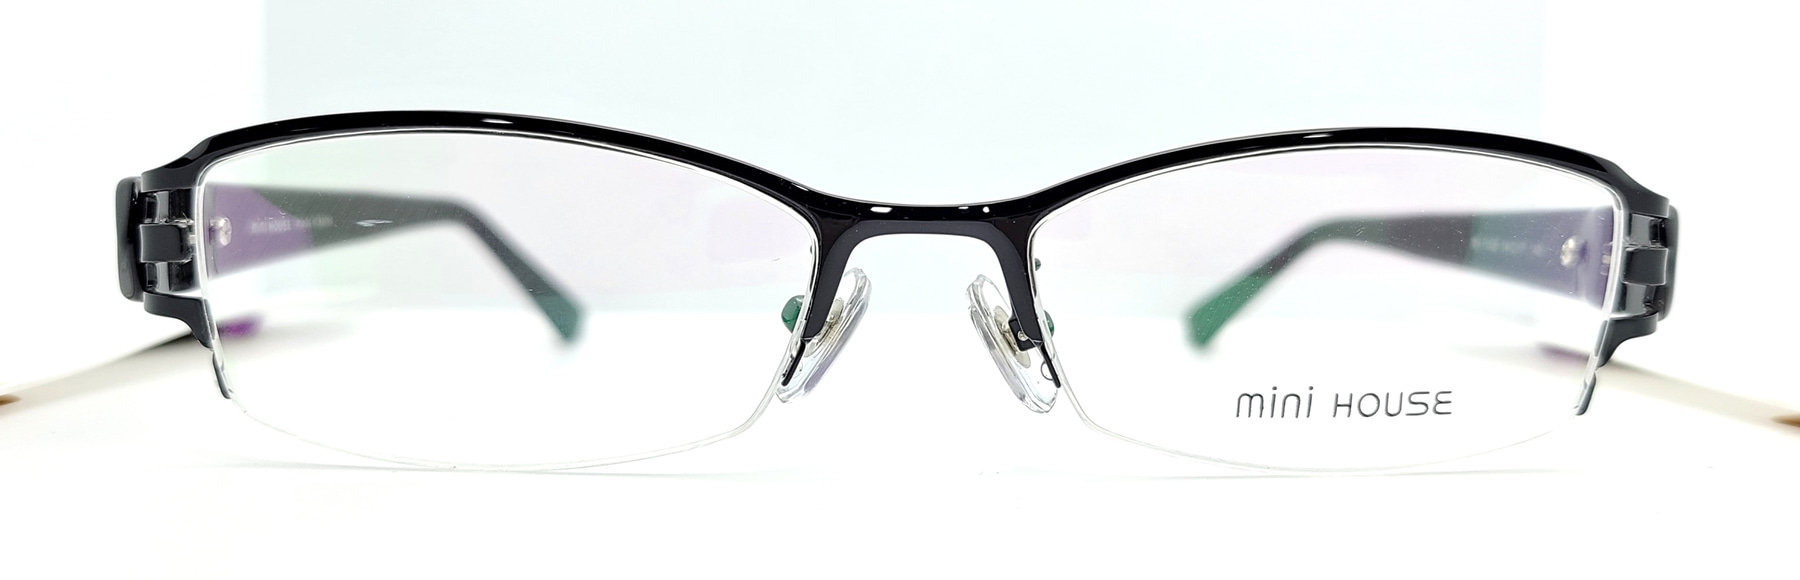 MINIHOUSE M-1052, Korean glasses, sunglasses, eyeglasses, glasses